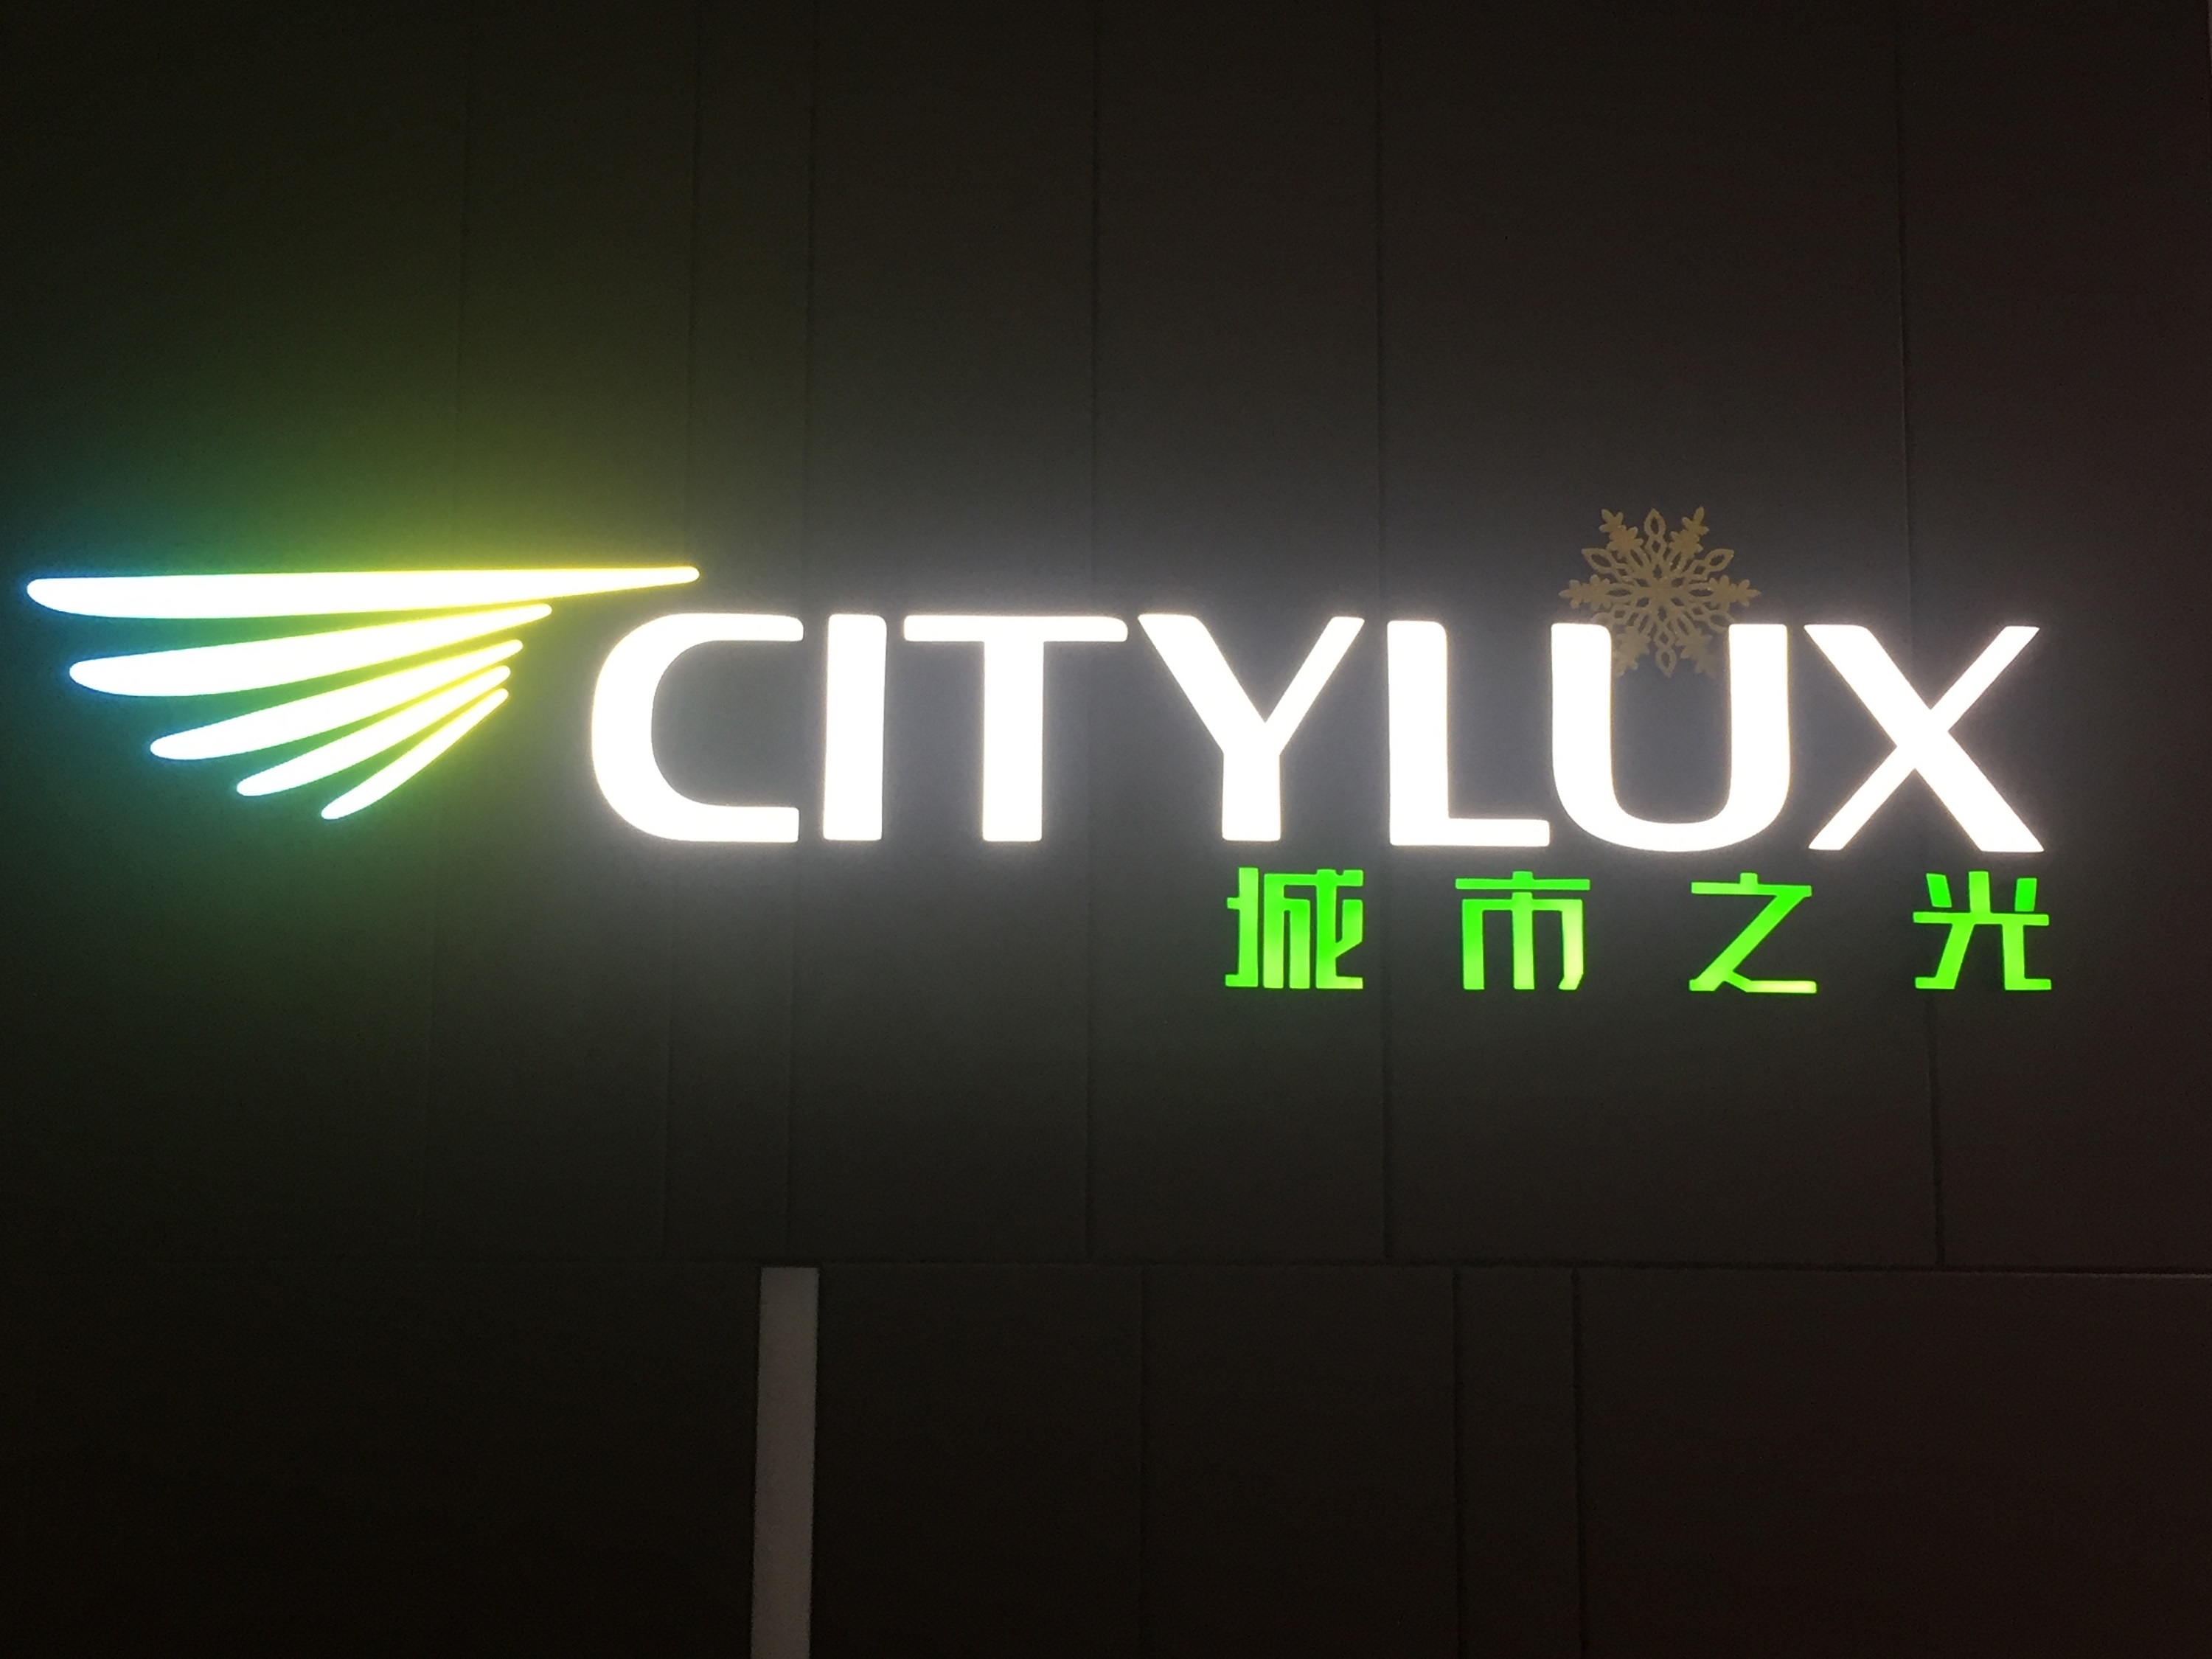 CITYLUX shared vision